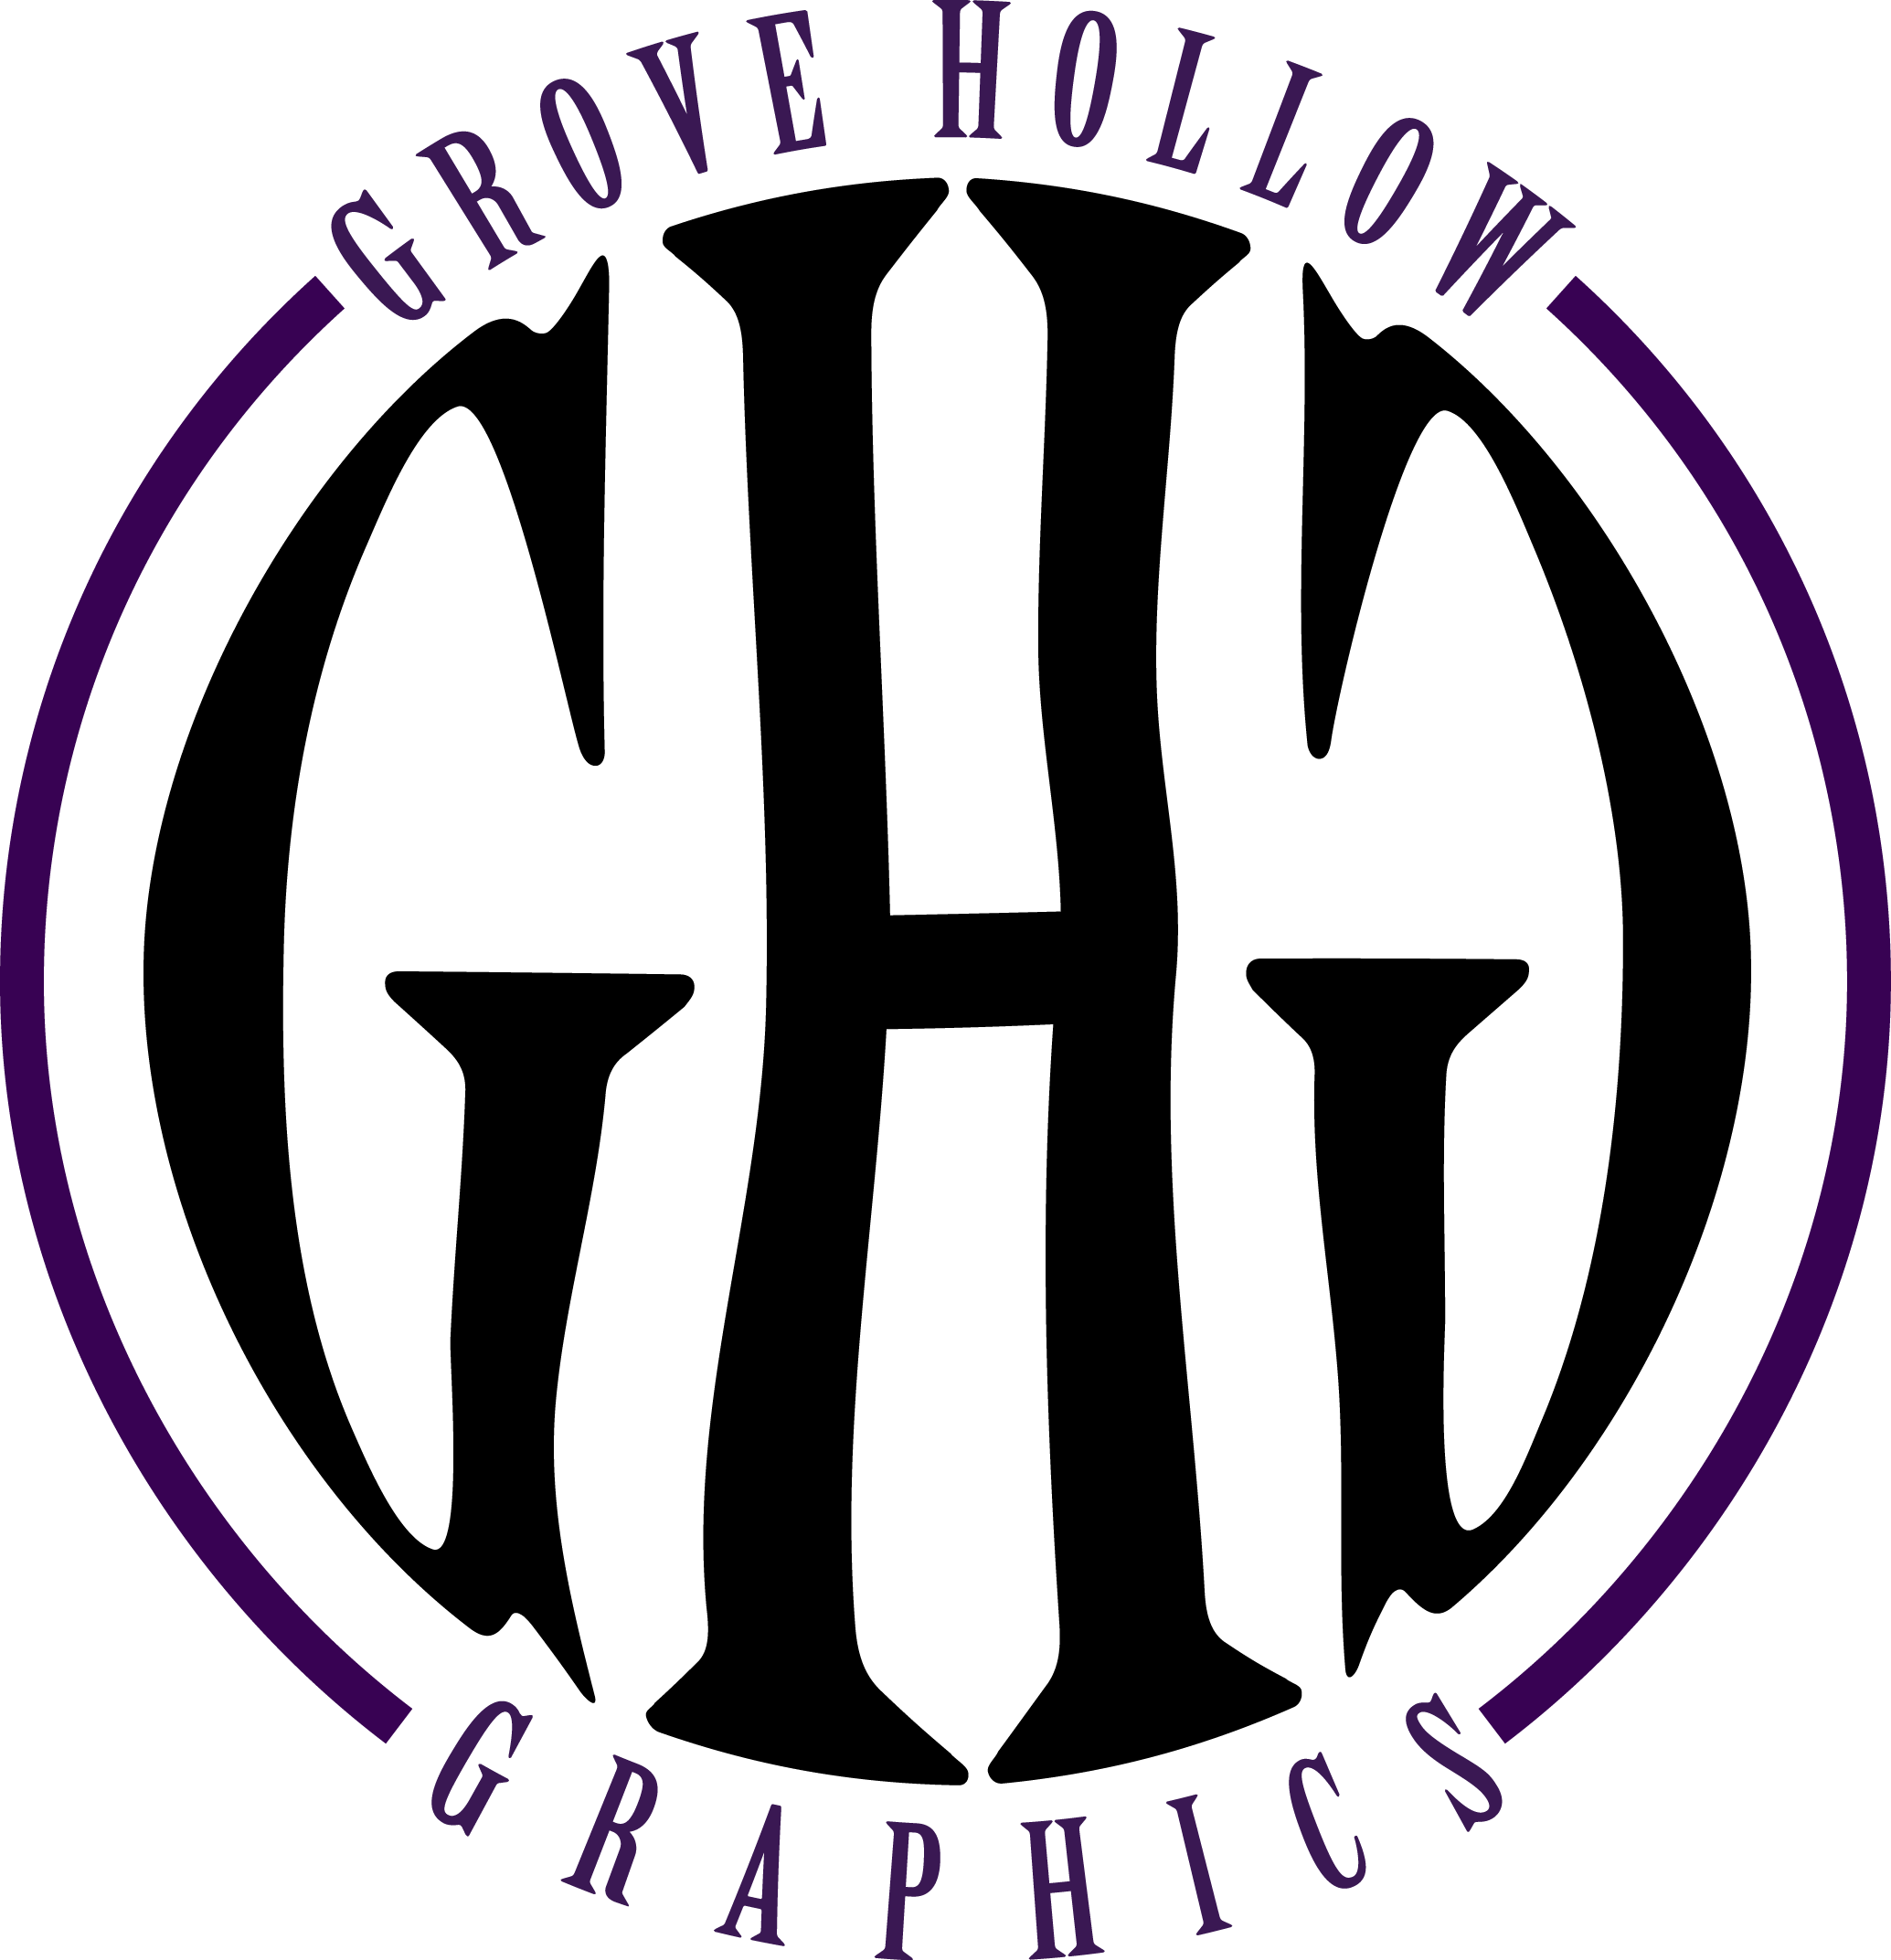 Grove Hollow Graphics